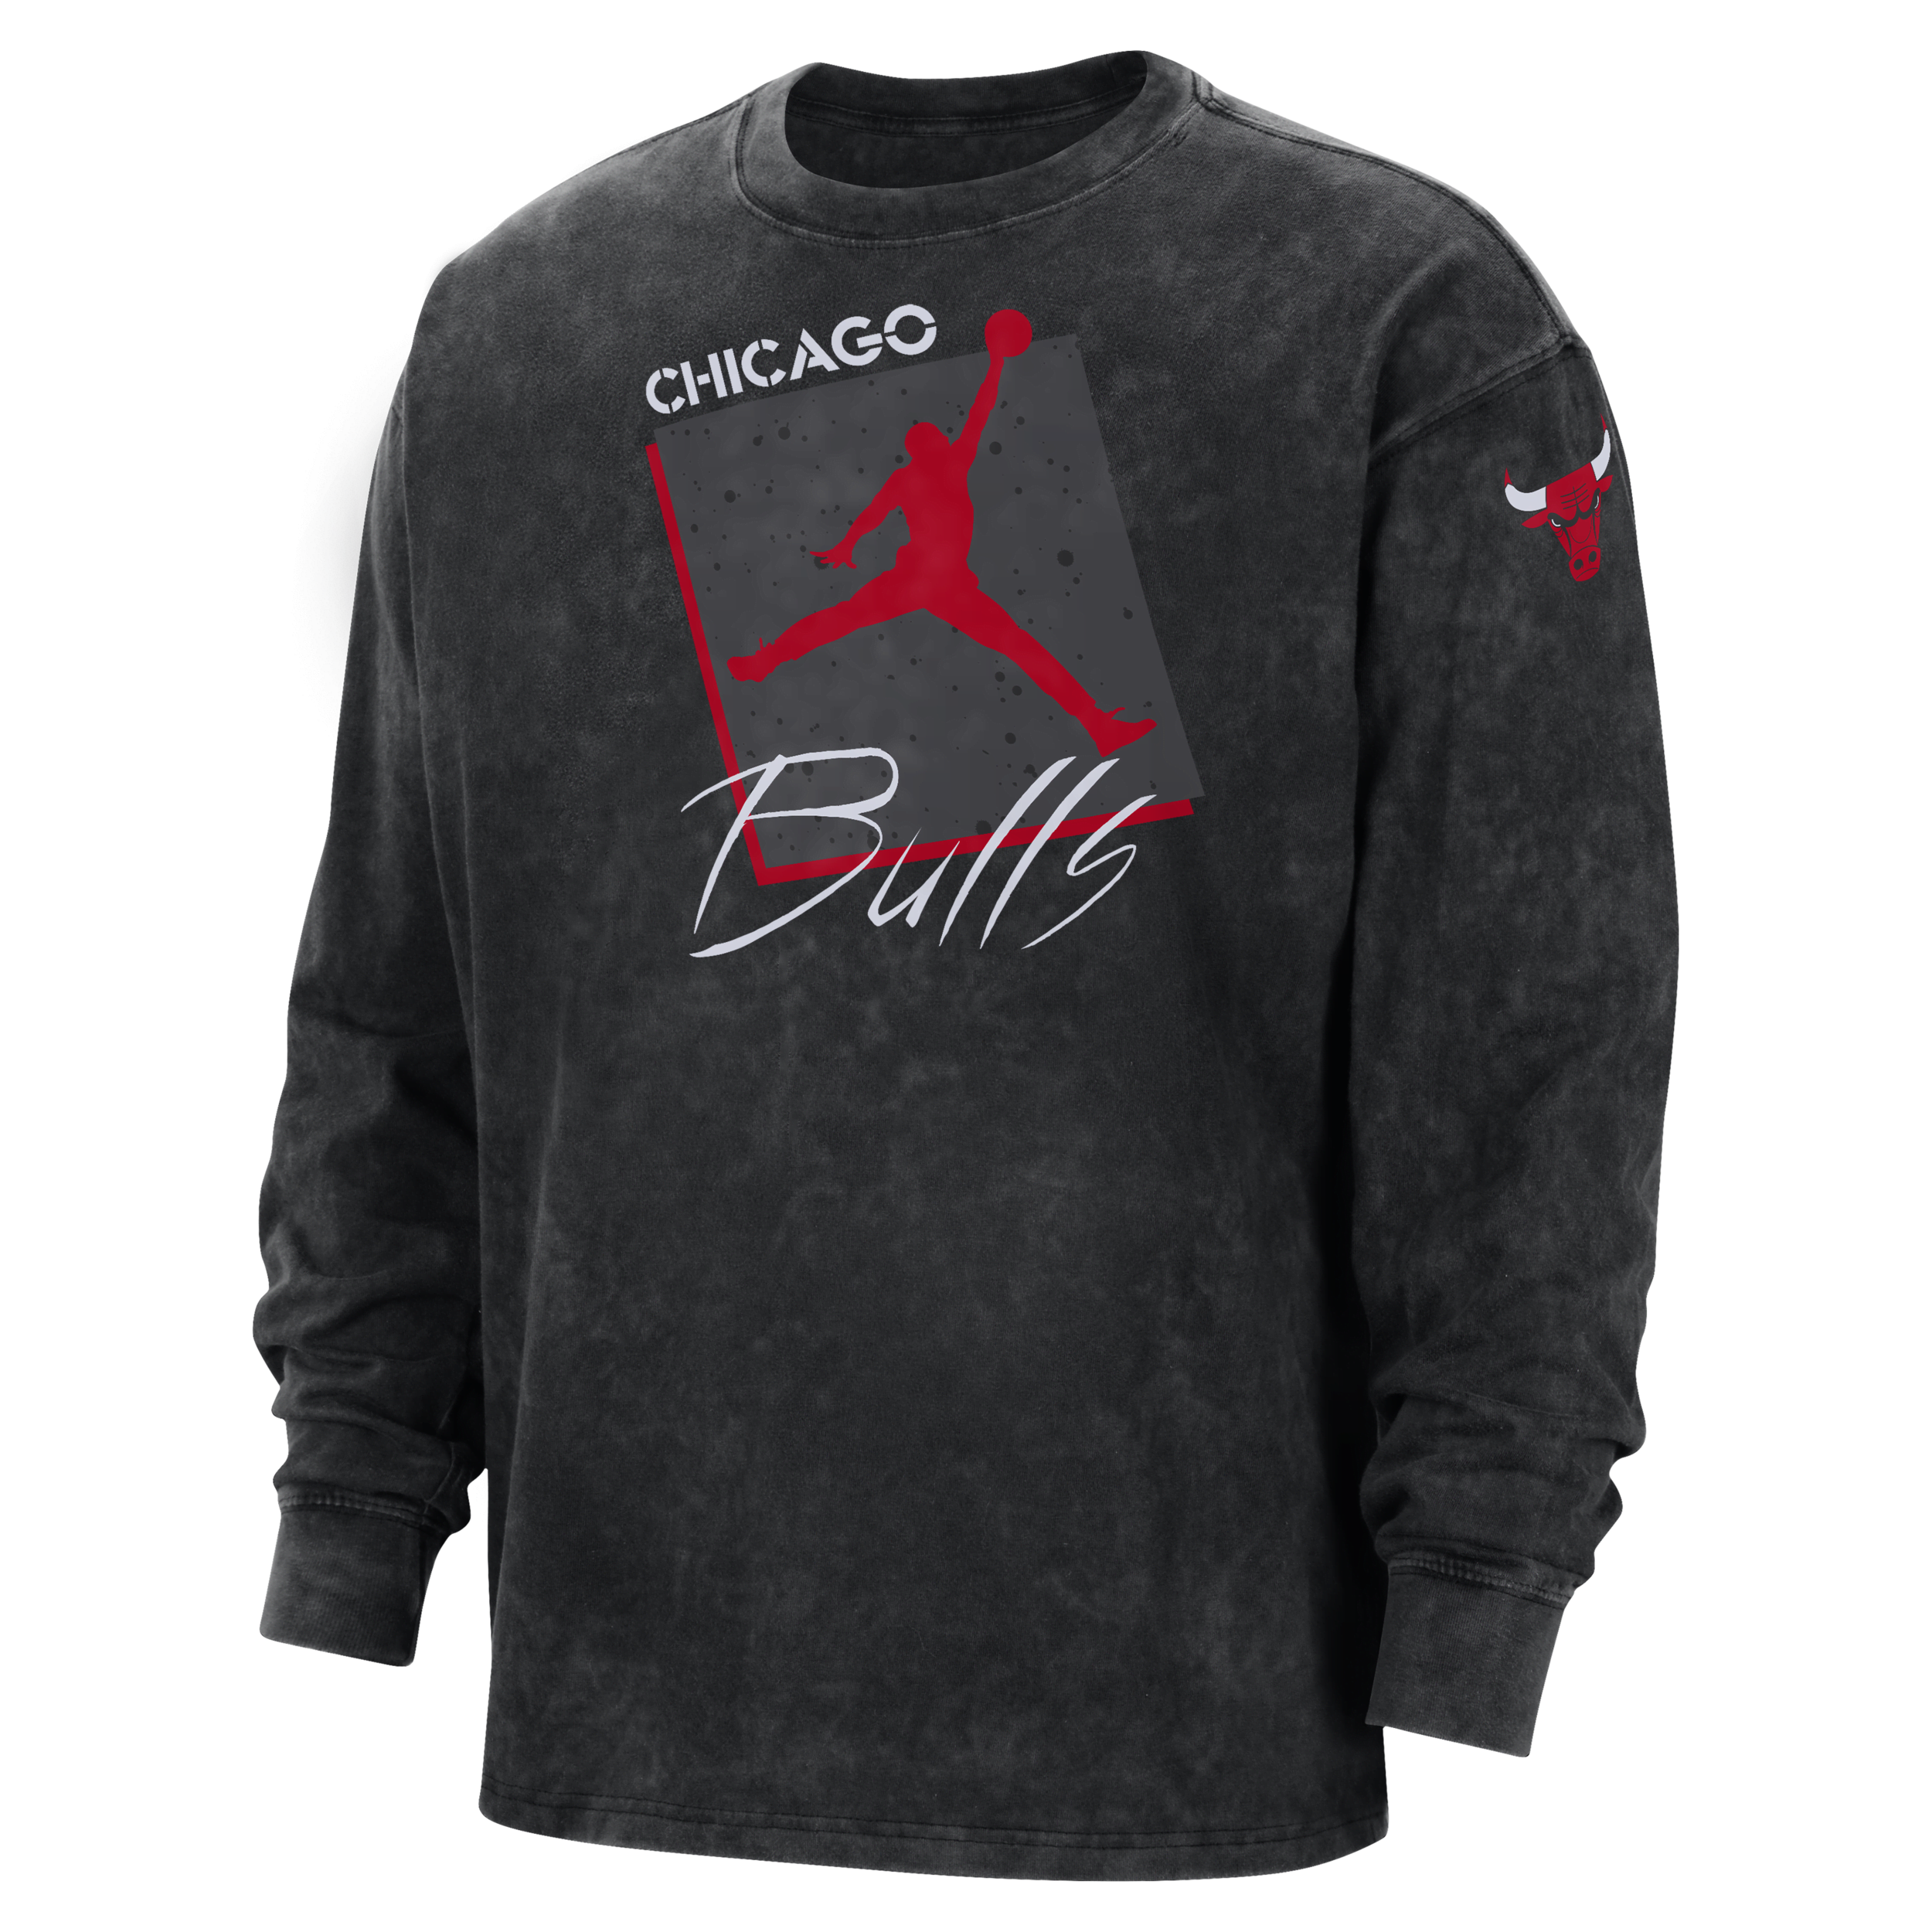 Men's NBA Nike Chicago Bulls Courtside Statement Edition T-Shirt - White